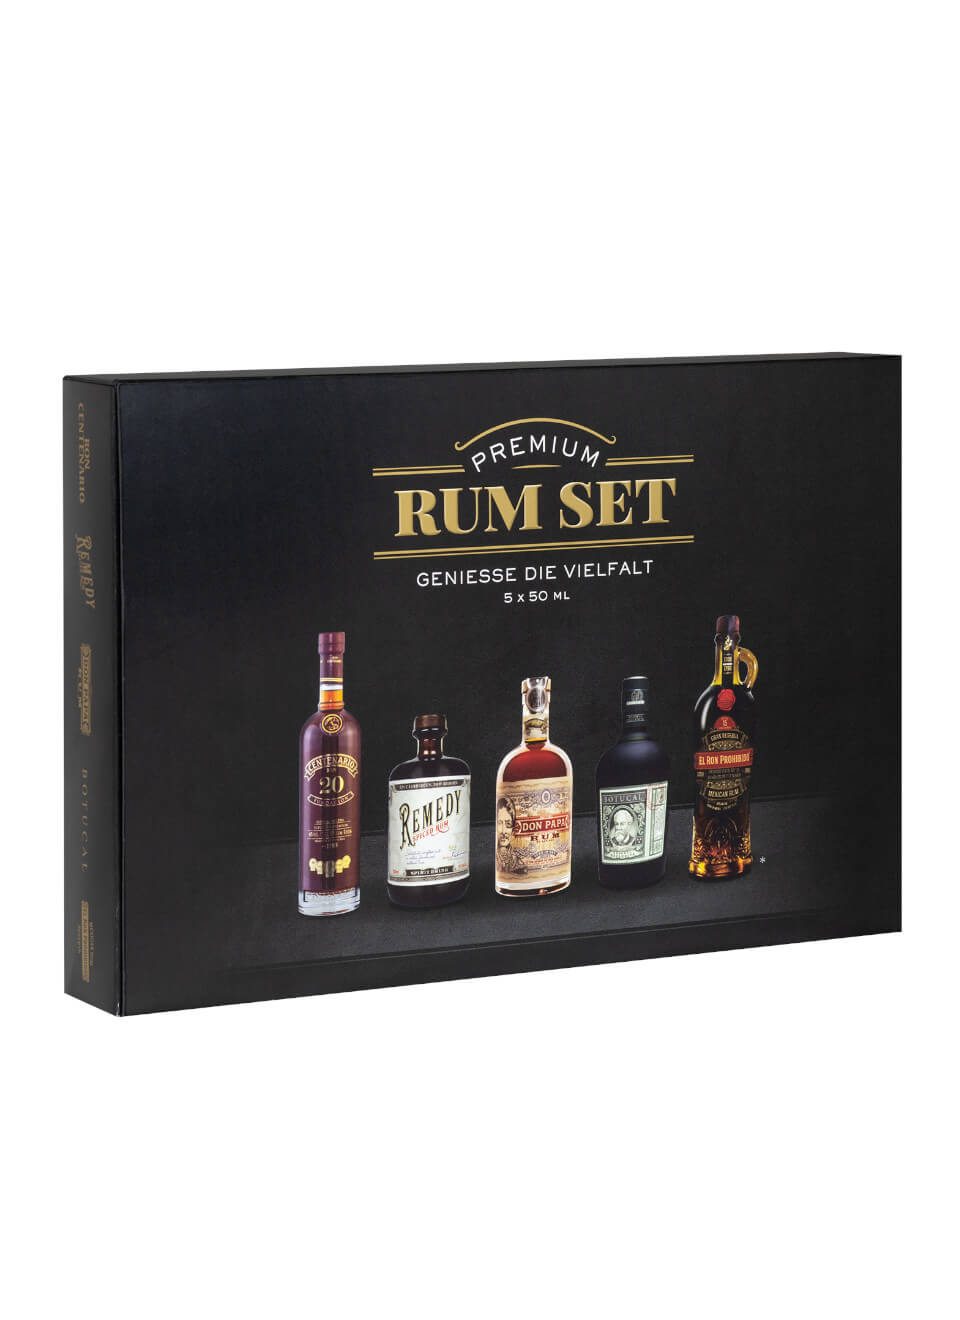 Sierra Madre Rum Tasting Kit 0,25 L